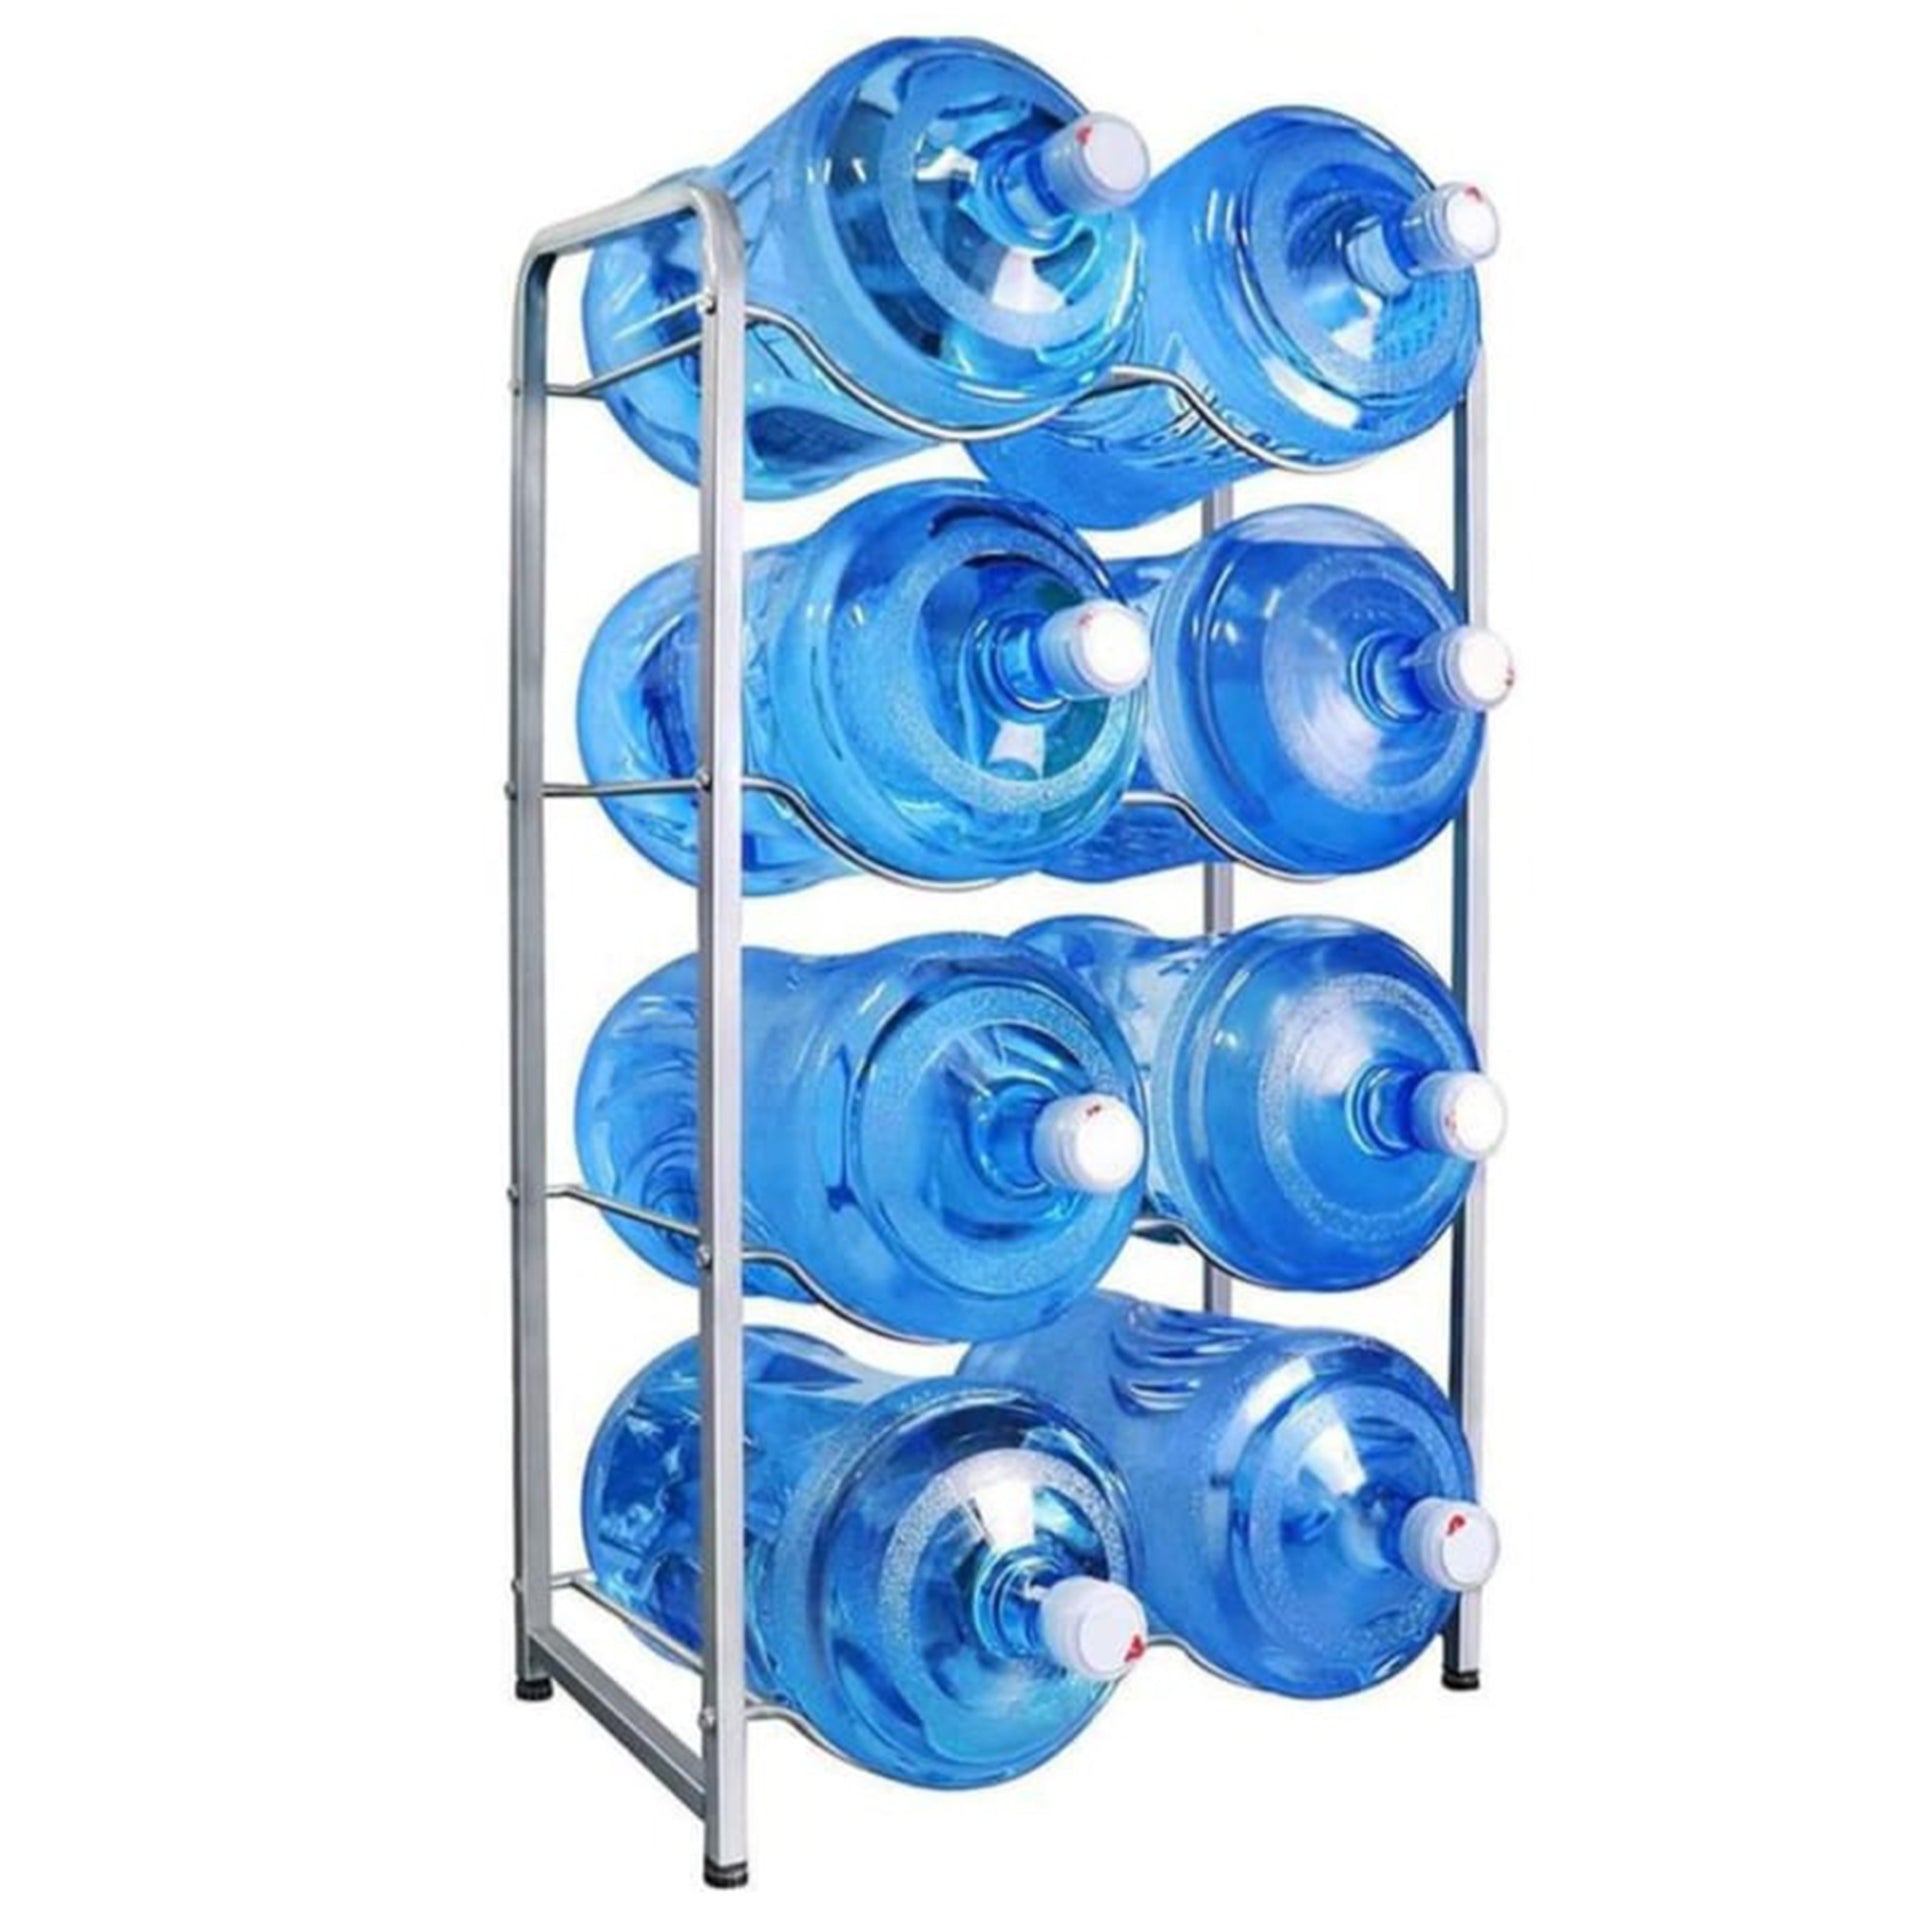 Soporte para botella de agua de 8 niveles (5 galones)